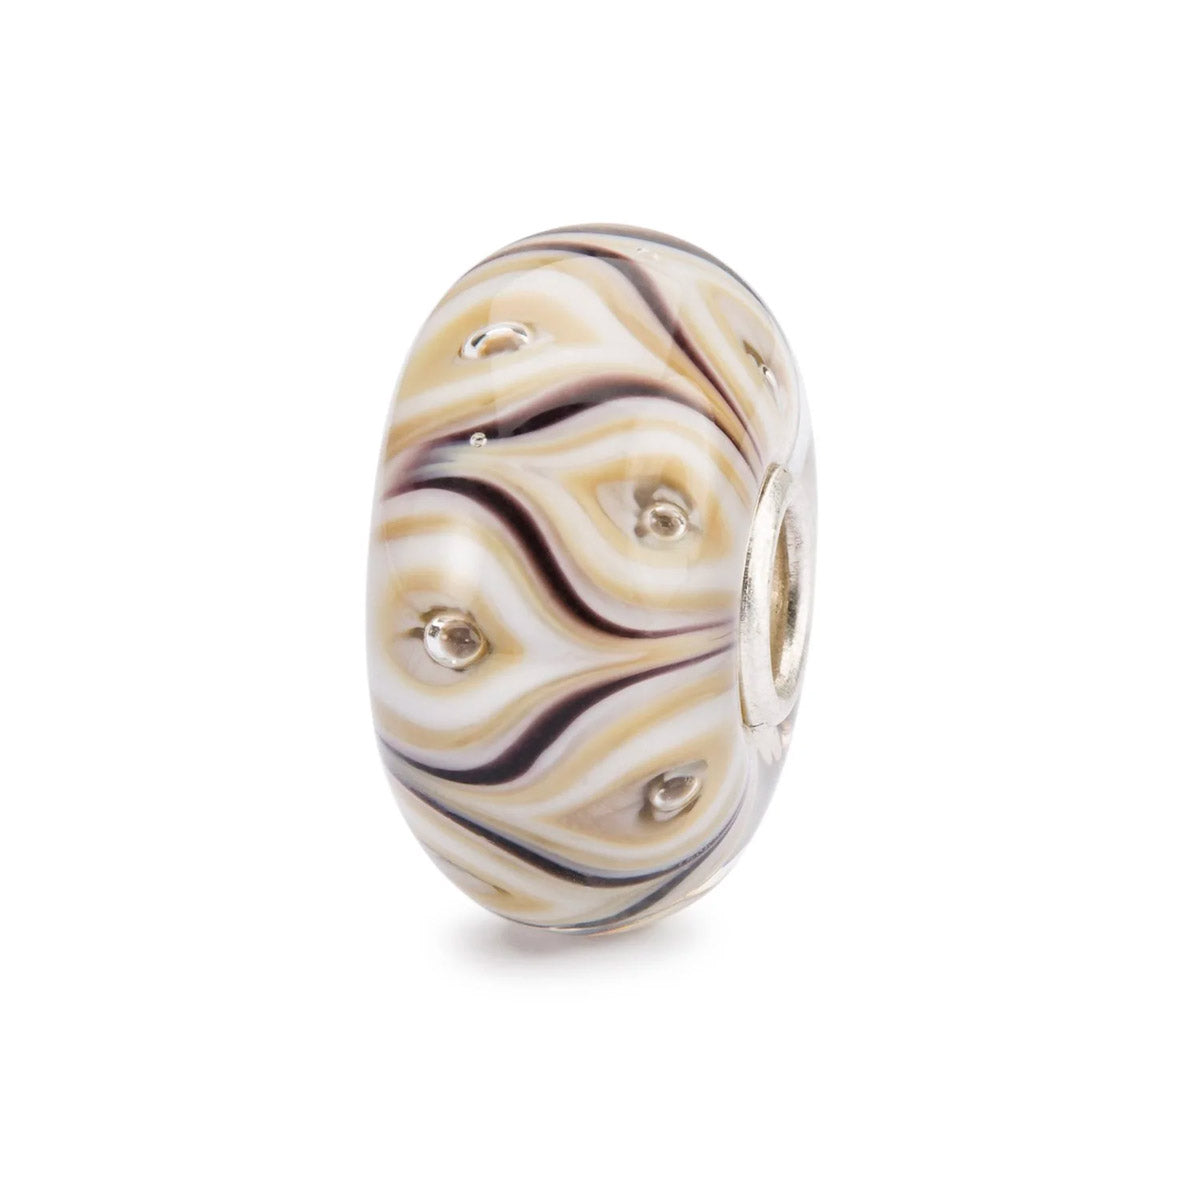 Abbraccio Trollbeads | Beads in vetro beige e bianco con strisce ondulate marroni | TGLBE-20251